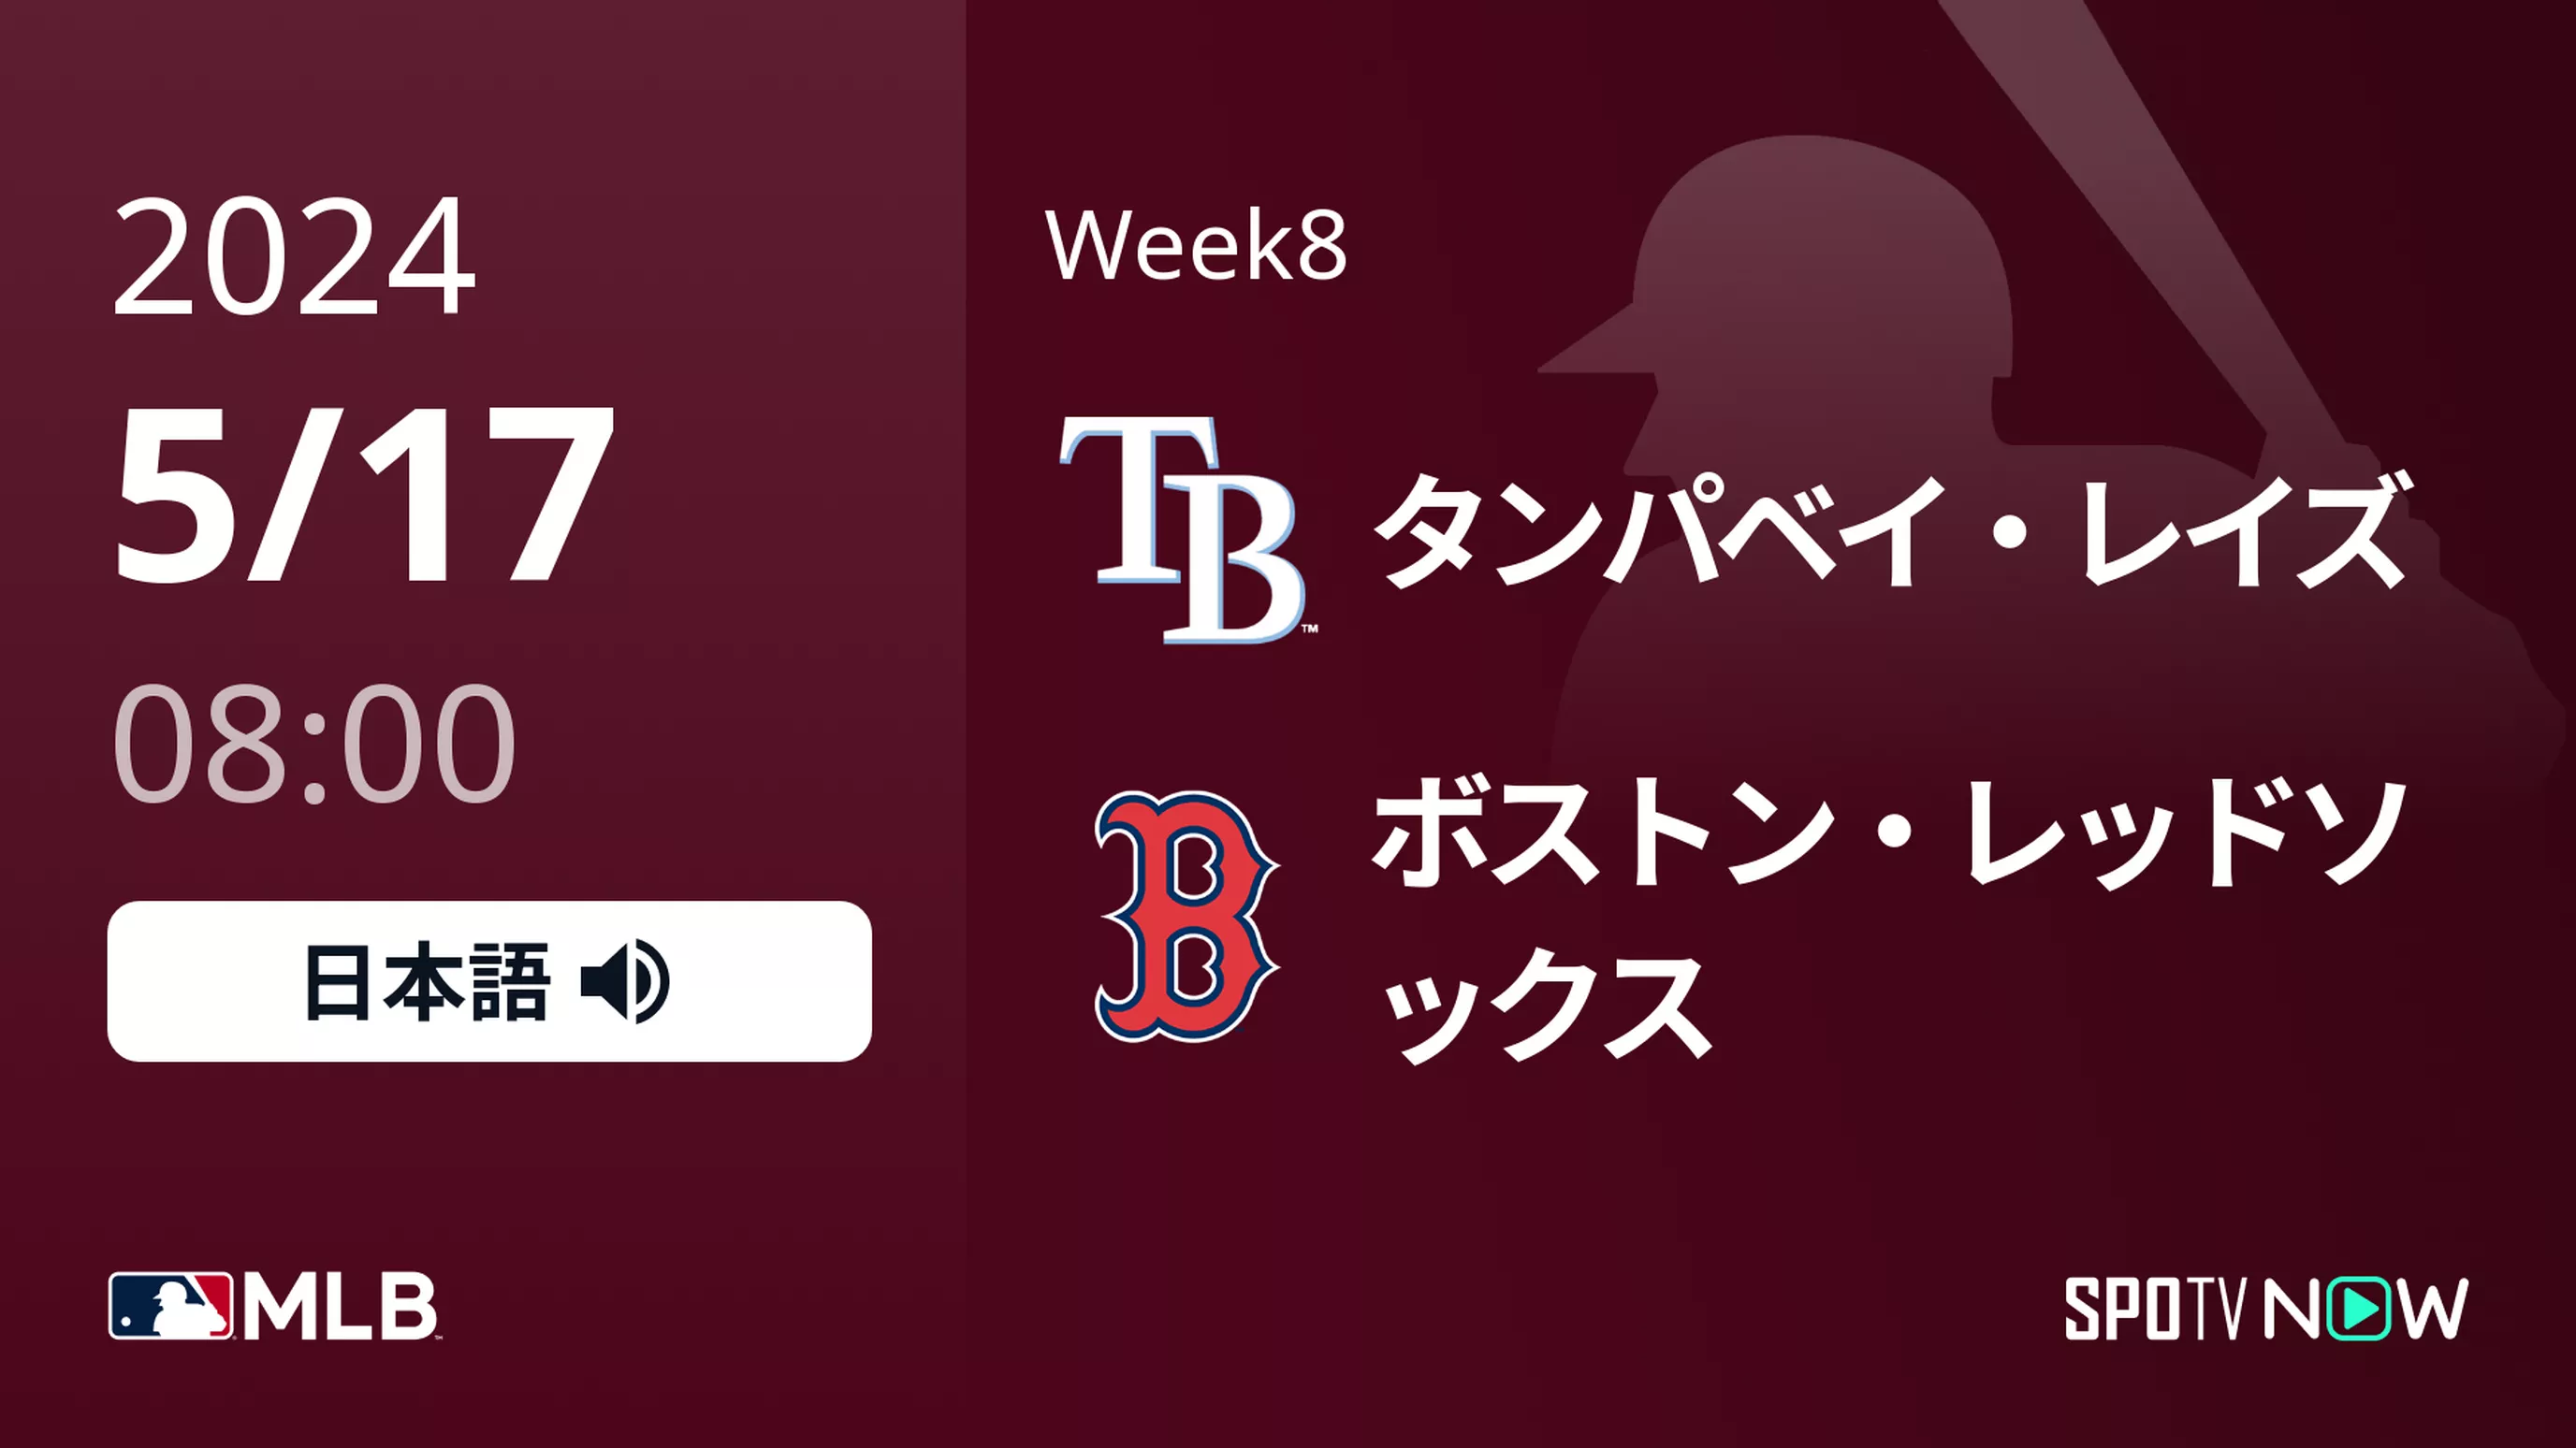 Week8 レイズ vs Rソックス 5/17[MLB]